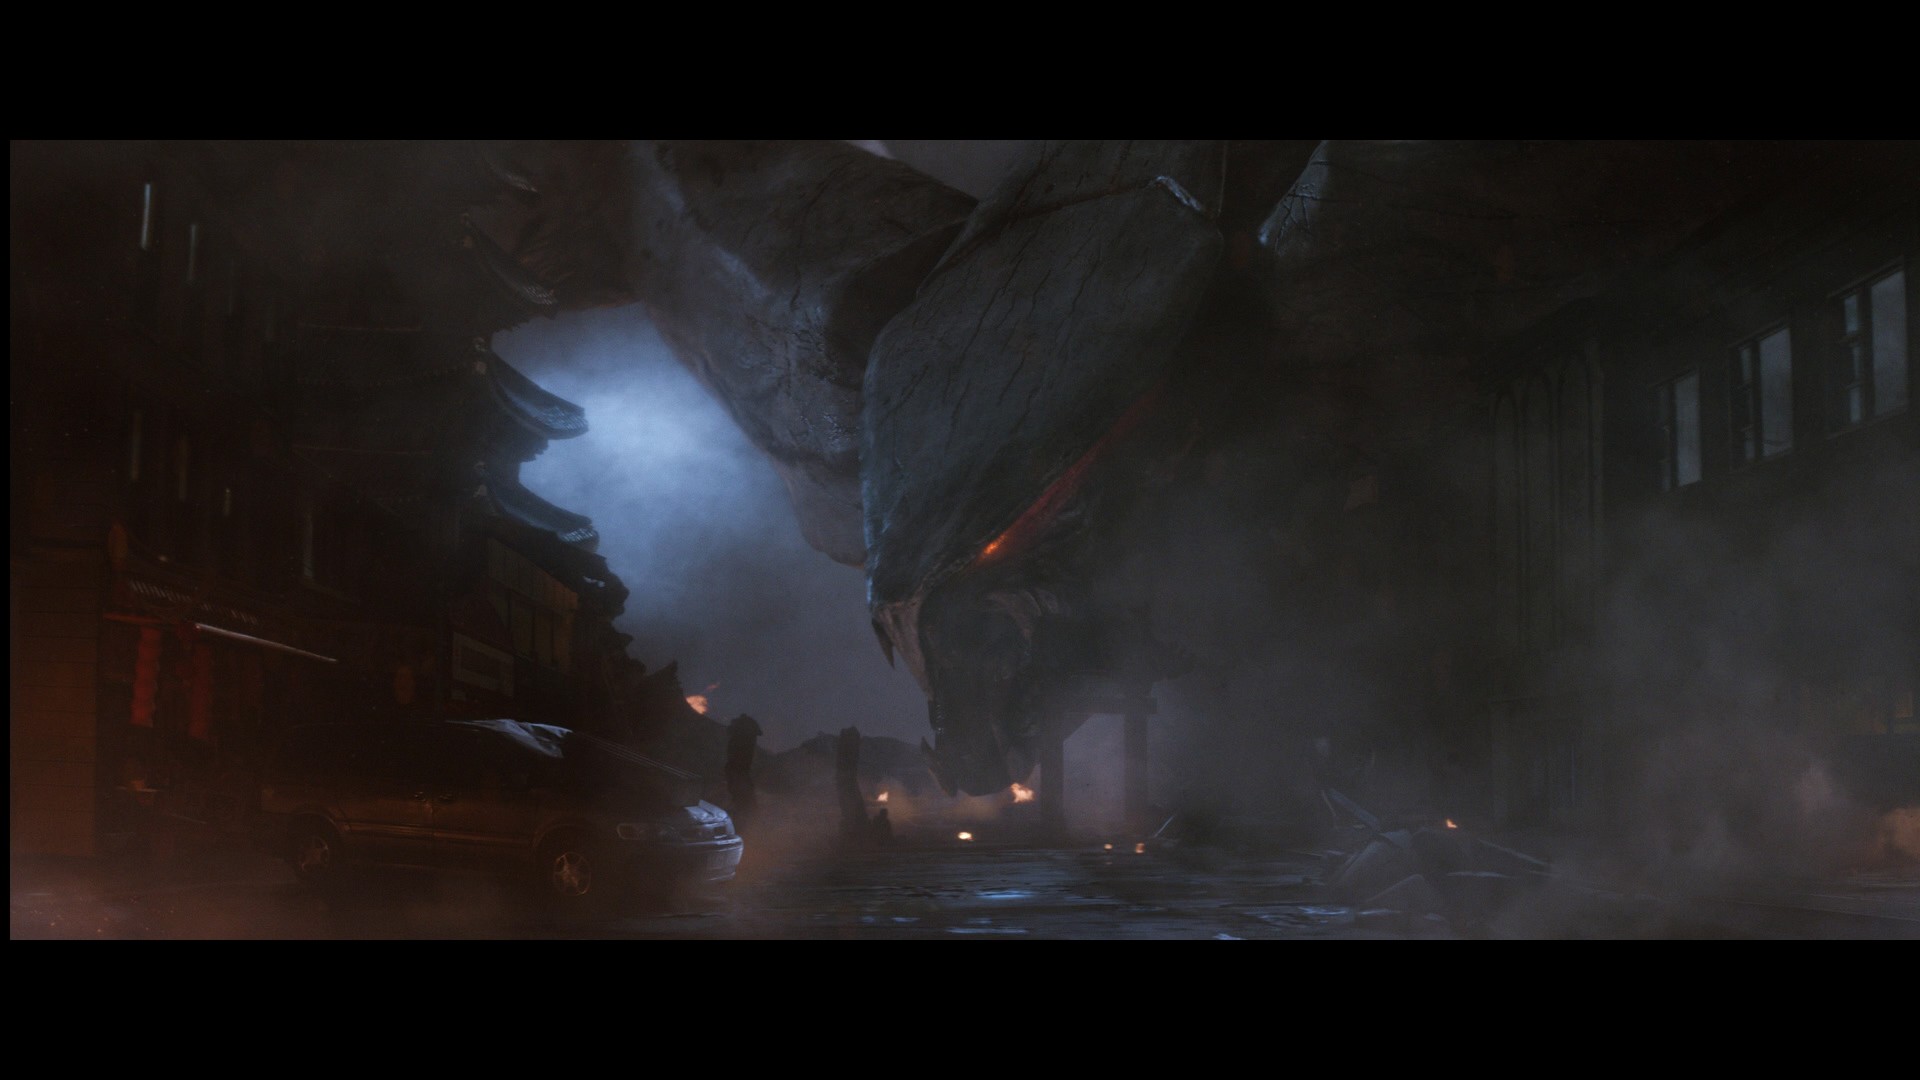 [哥斯拉].Godzilla.2014.3D.GER.BluRay.1080p.AVC.DTS-HD.MA.7.1-HDBEE    41.67G! E5 J- K/ f$ F-11.jpg